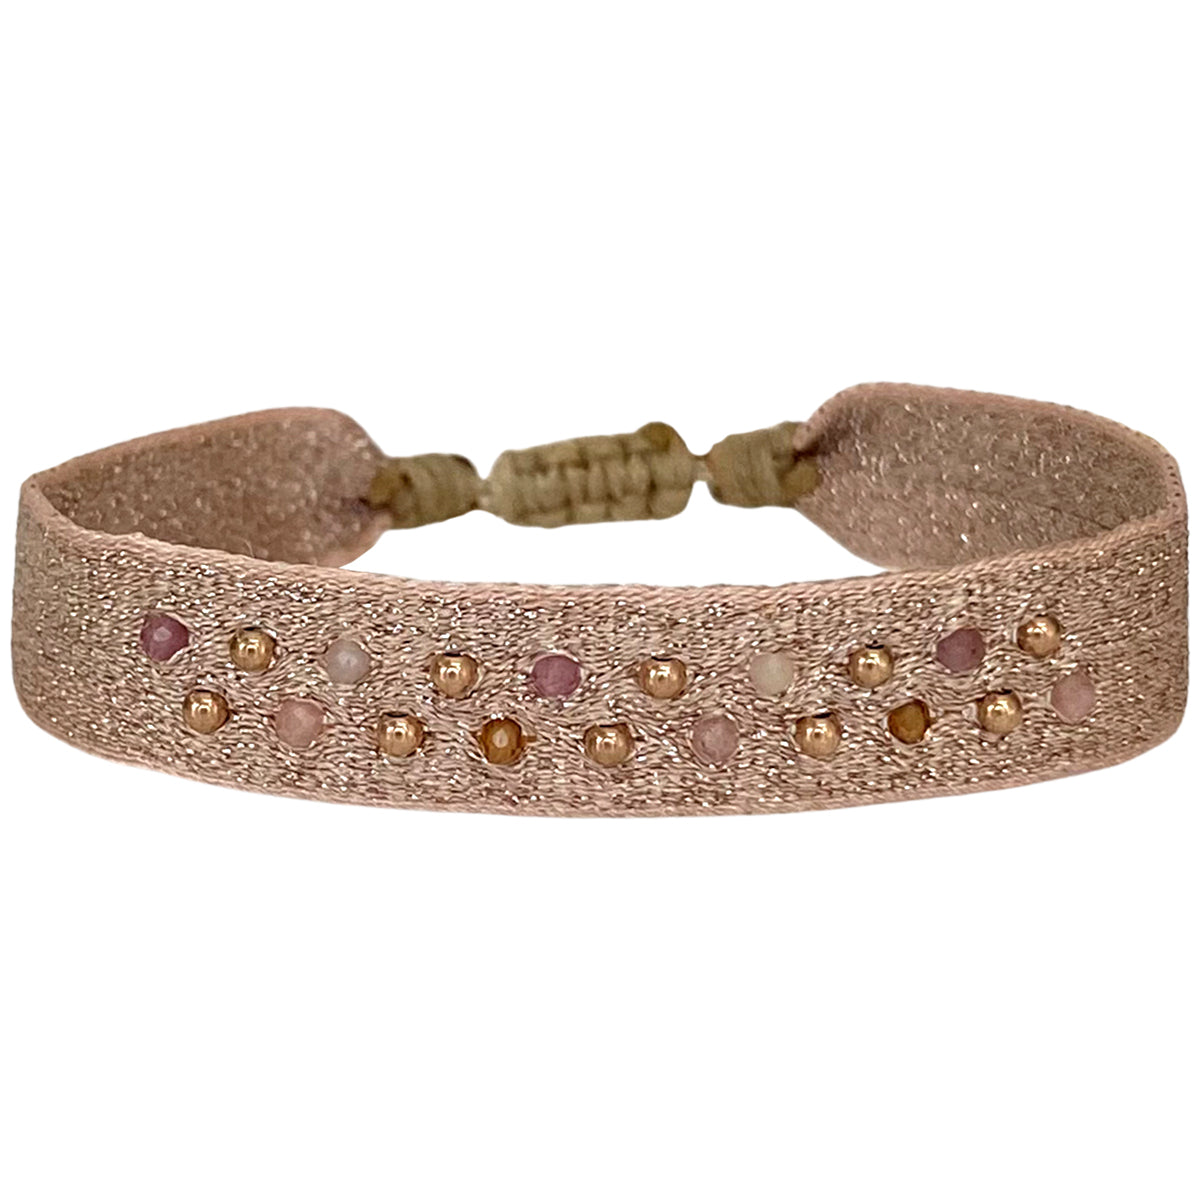 Paris Handwoven Bracelet Featuring Gemstones and Rose Gold Details in Pink Tones